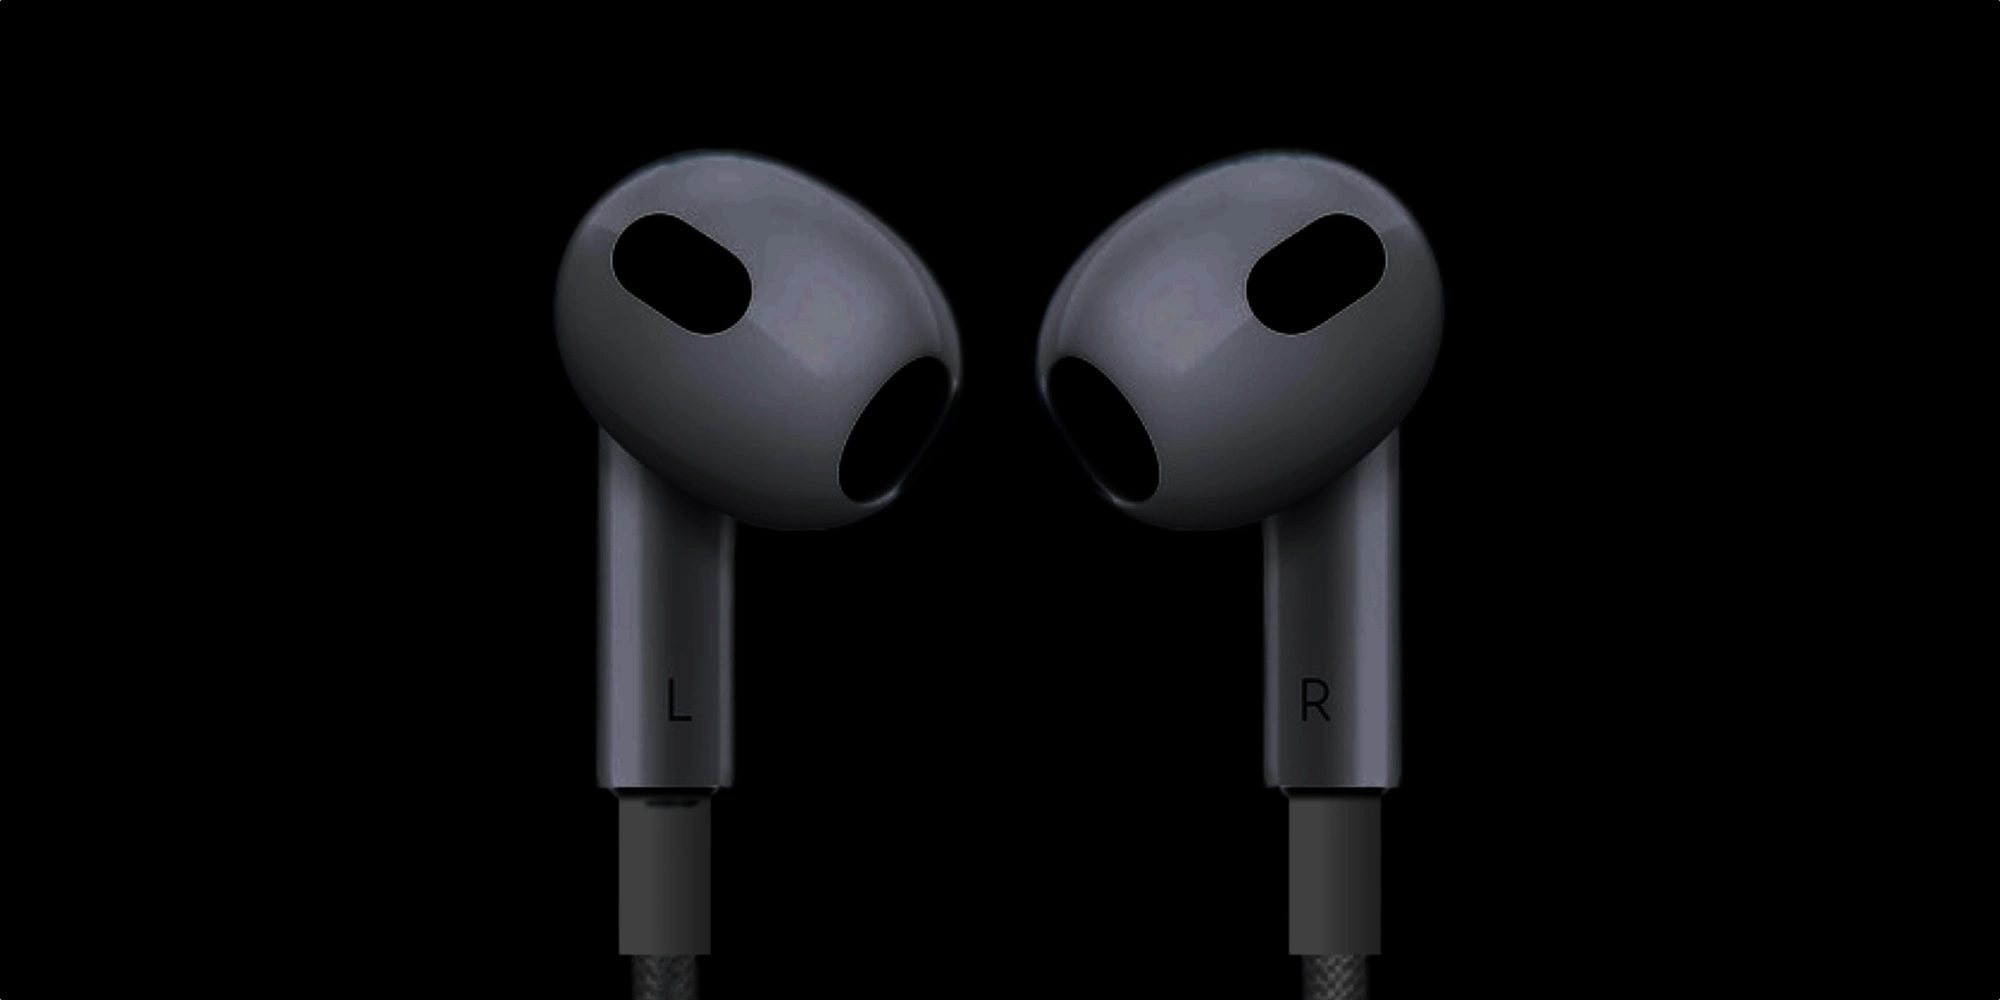 9to5Mac's EarPods concept in black